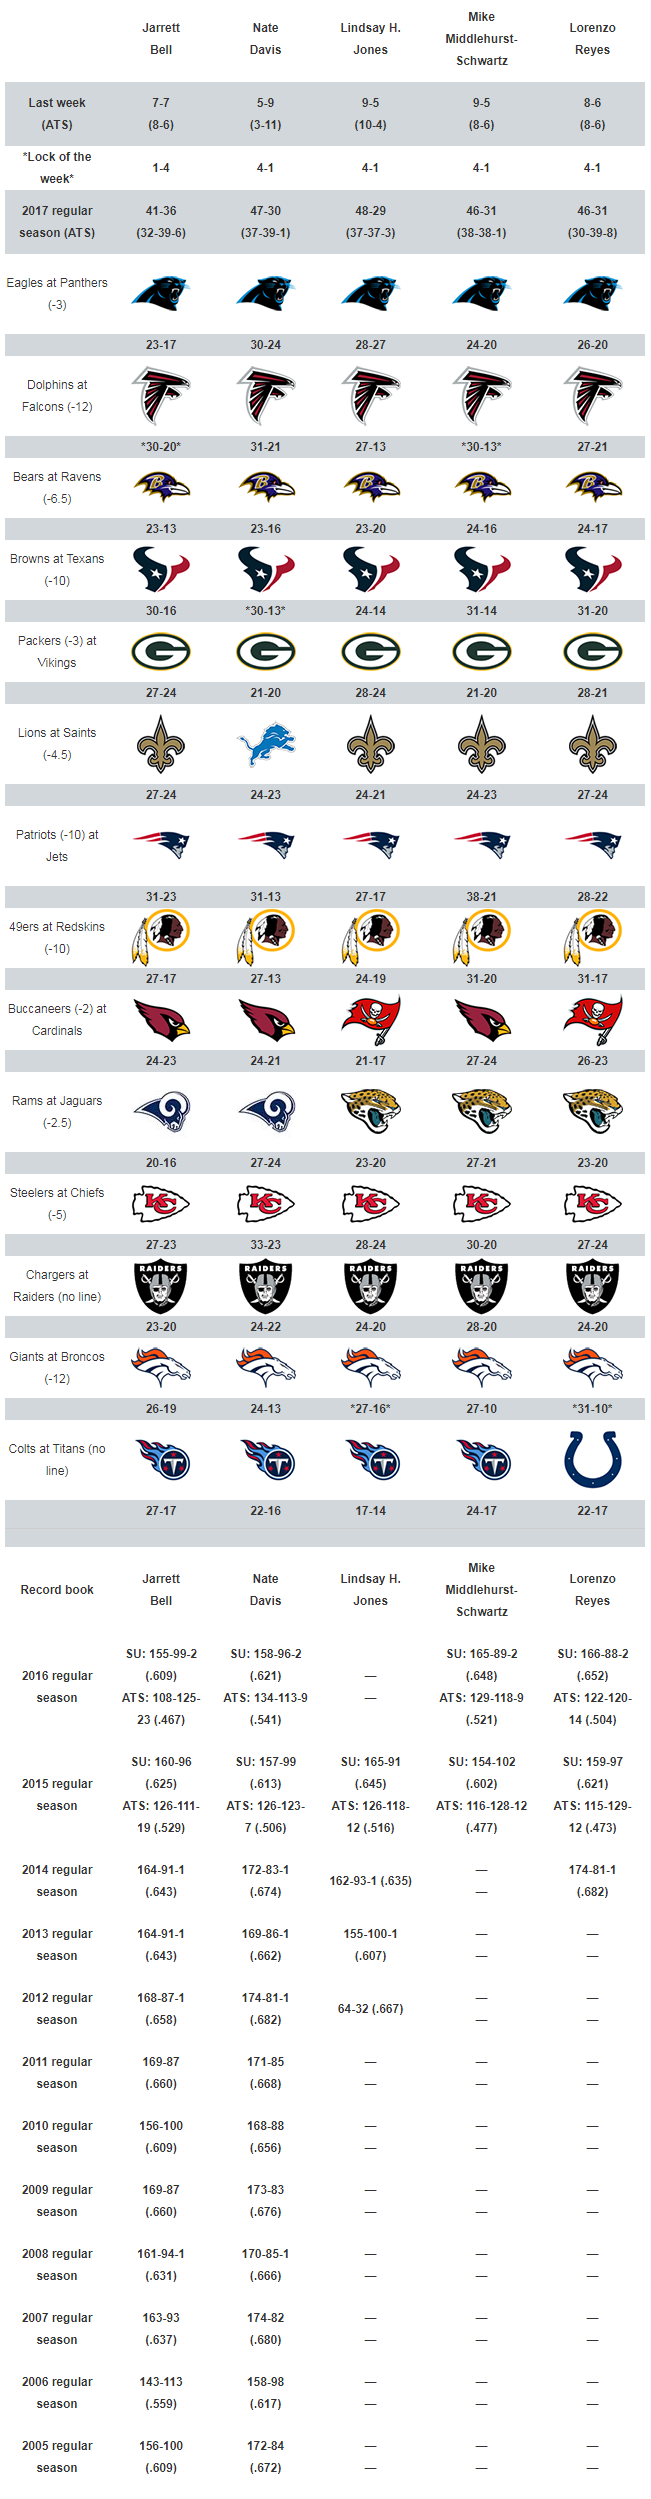 USA TODAY Sports' Week 6 NFL picks: Steelers-Chiefs playoff rematch